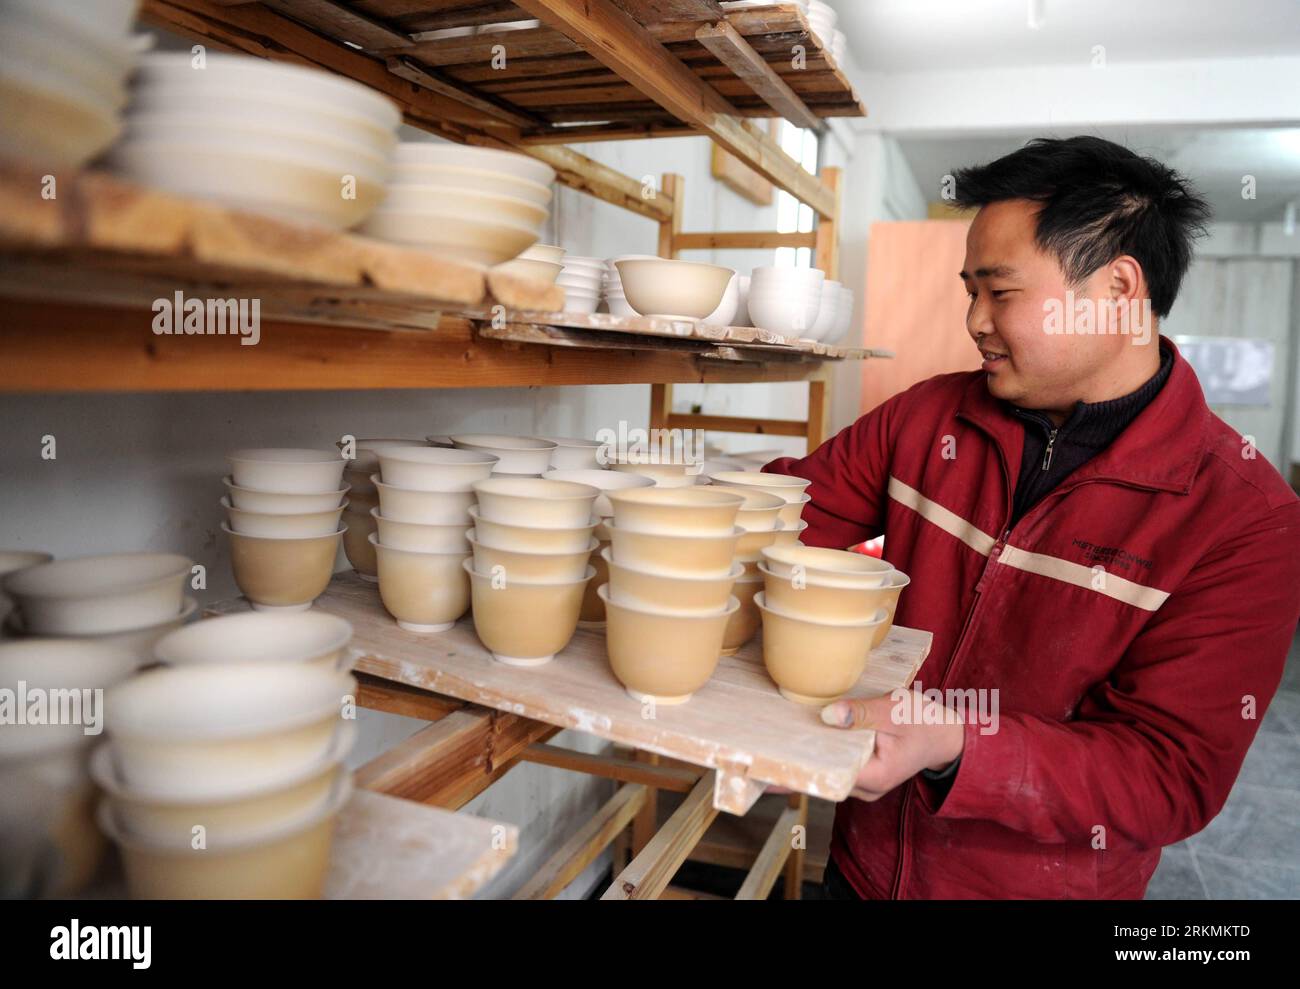 Bildnummer: 56777877  Datum: 21.12.2011  Copyright: imago/Xinhua (111223) -- JINGDEZHEN, Dec. 23, 2011 (Xinhua) -- A worker carries porcelain adobes for firing at a procelain workshop in Porcelain Capital Jingdezhen City, east China s Jiangxi Province, Dec. 21, 2011. Jingdezhen s percelain has been famous not only in China but in time it became known internationally for being as thin as paper, as white as jade, as bright as a mirror, and as sound as a bell. (Xinhua/Zhou Ke) (lfj) CHINA-JIANGXI-JINGDEZHEN-PORCELAIN (CN) PUBLICATIONxNOTxINxCHN Wirtschaft Porzellan Arbeitswelten Handwerk xda x0x Stock Photo